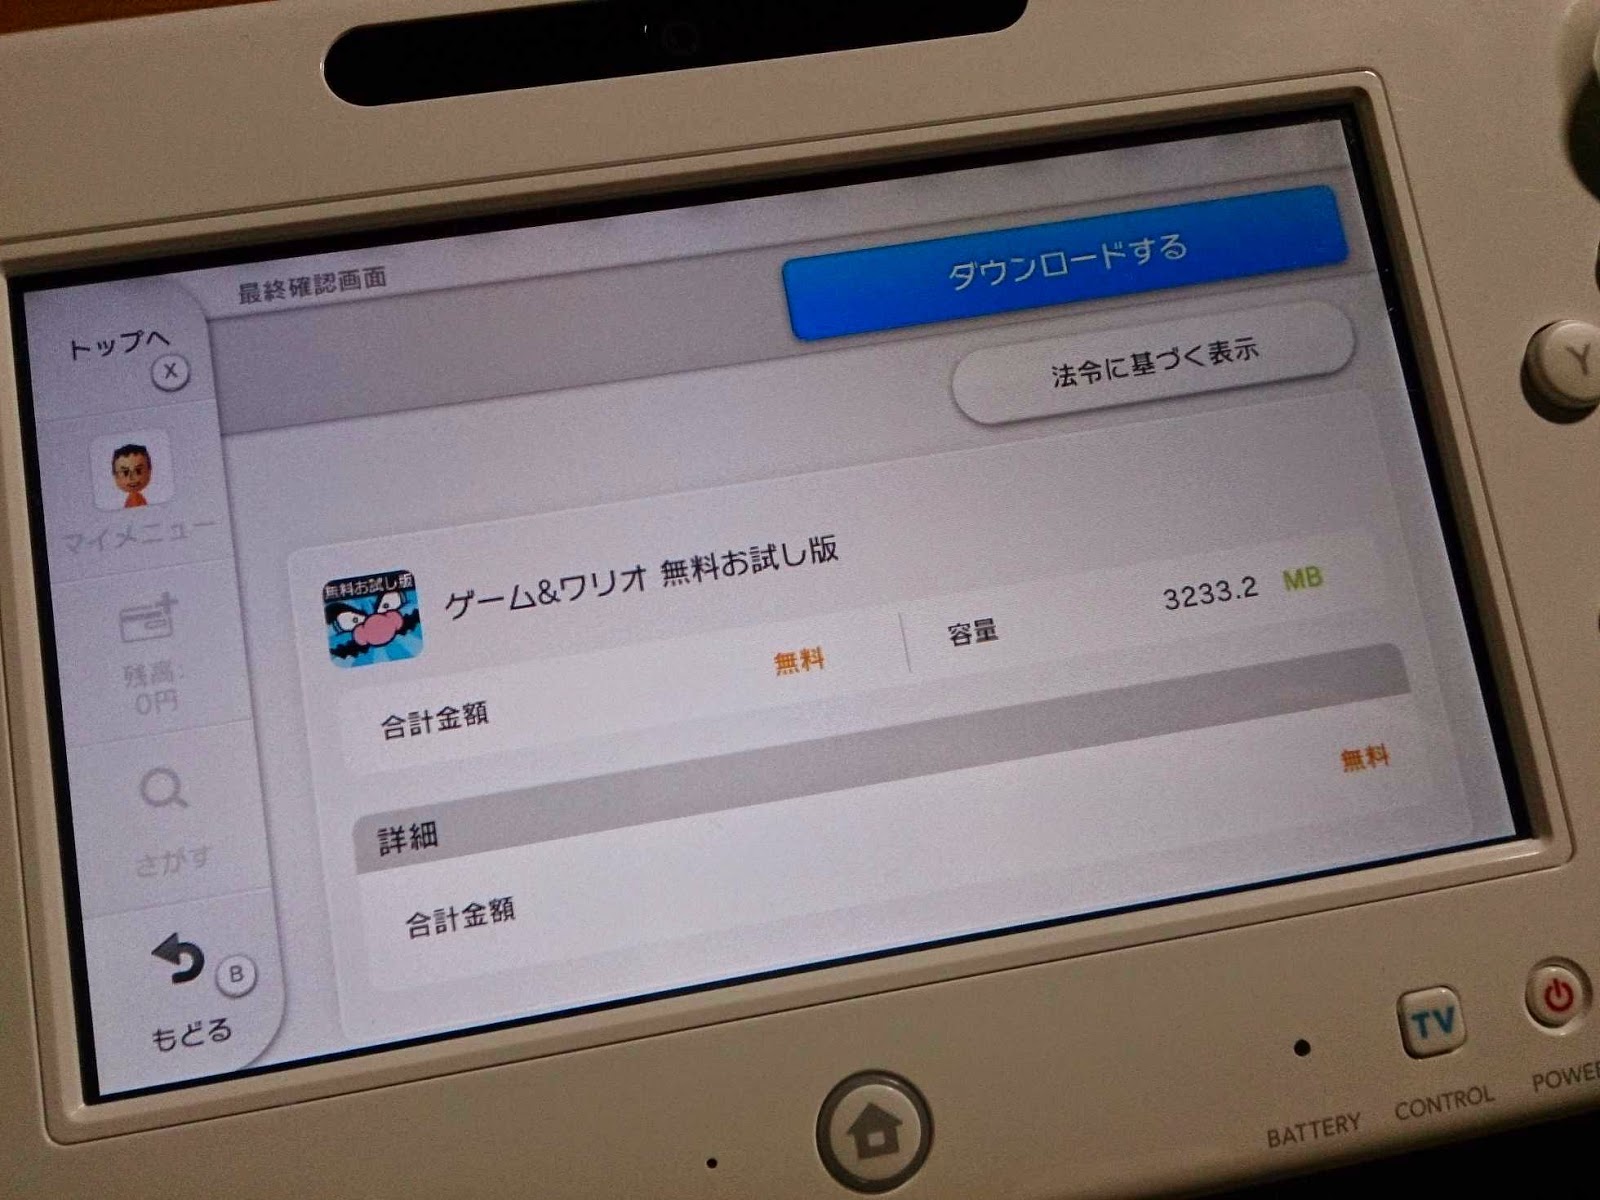 akiraの暇を晒す日記帳的な(暇晒帳): WiiUの「マリオカート8」早期購入者特典「2本選んで1か月無料お試しキャンペーン」のやり方と報告